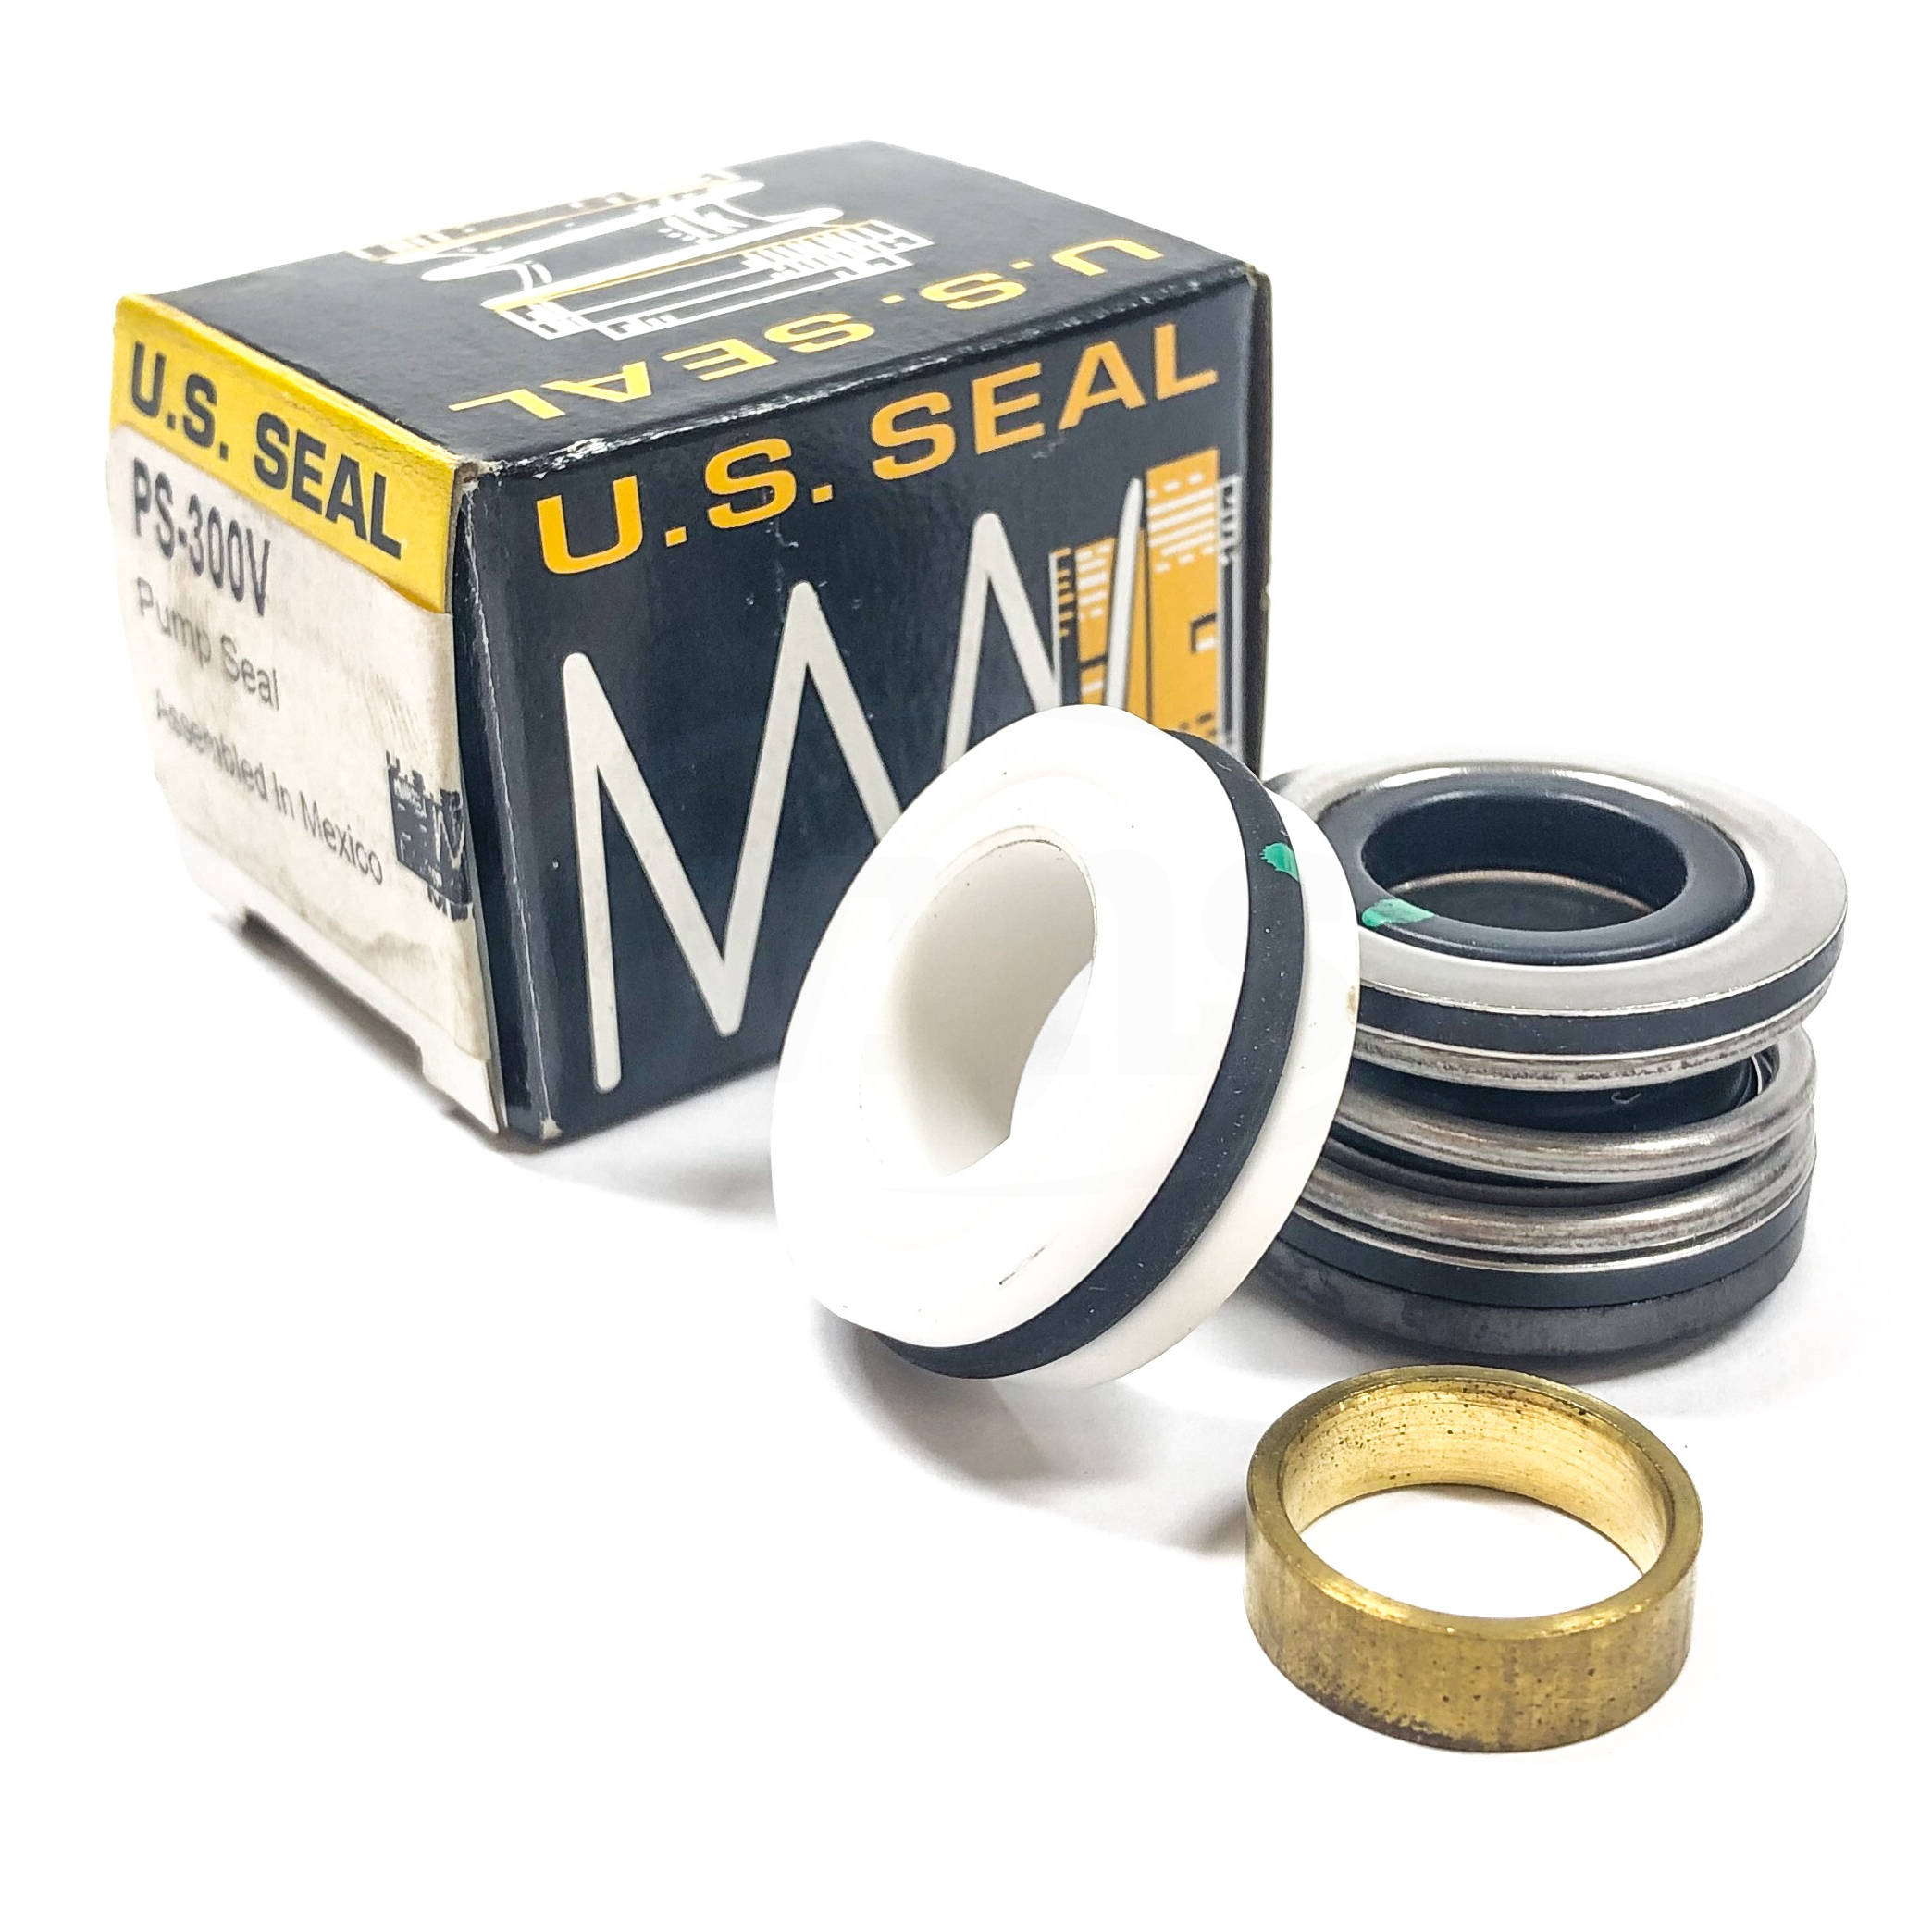 PS-300V U.S. Seal Mfg 5/8' Pump Seal 1